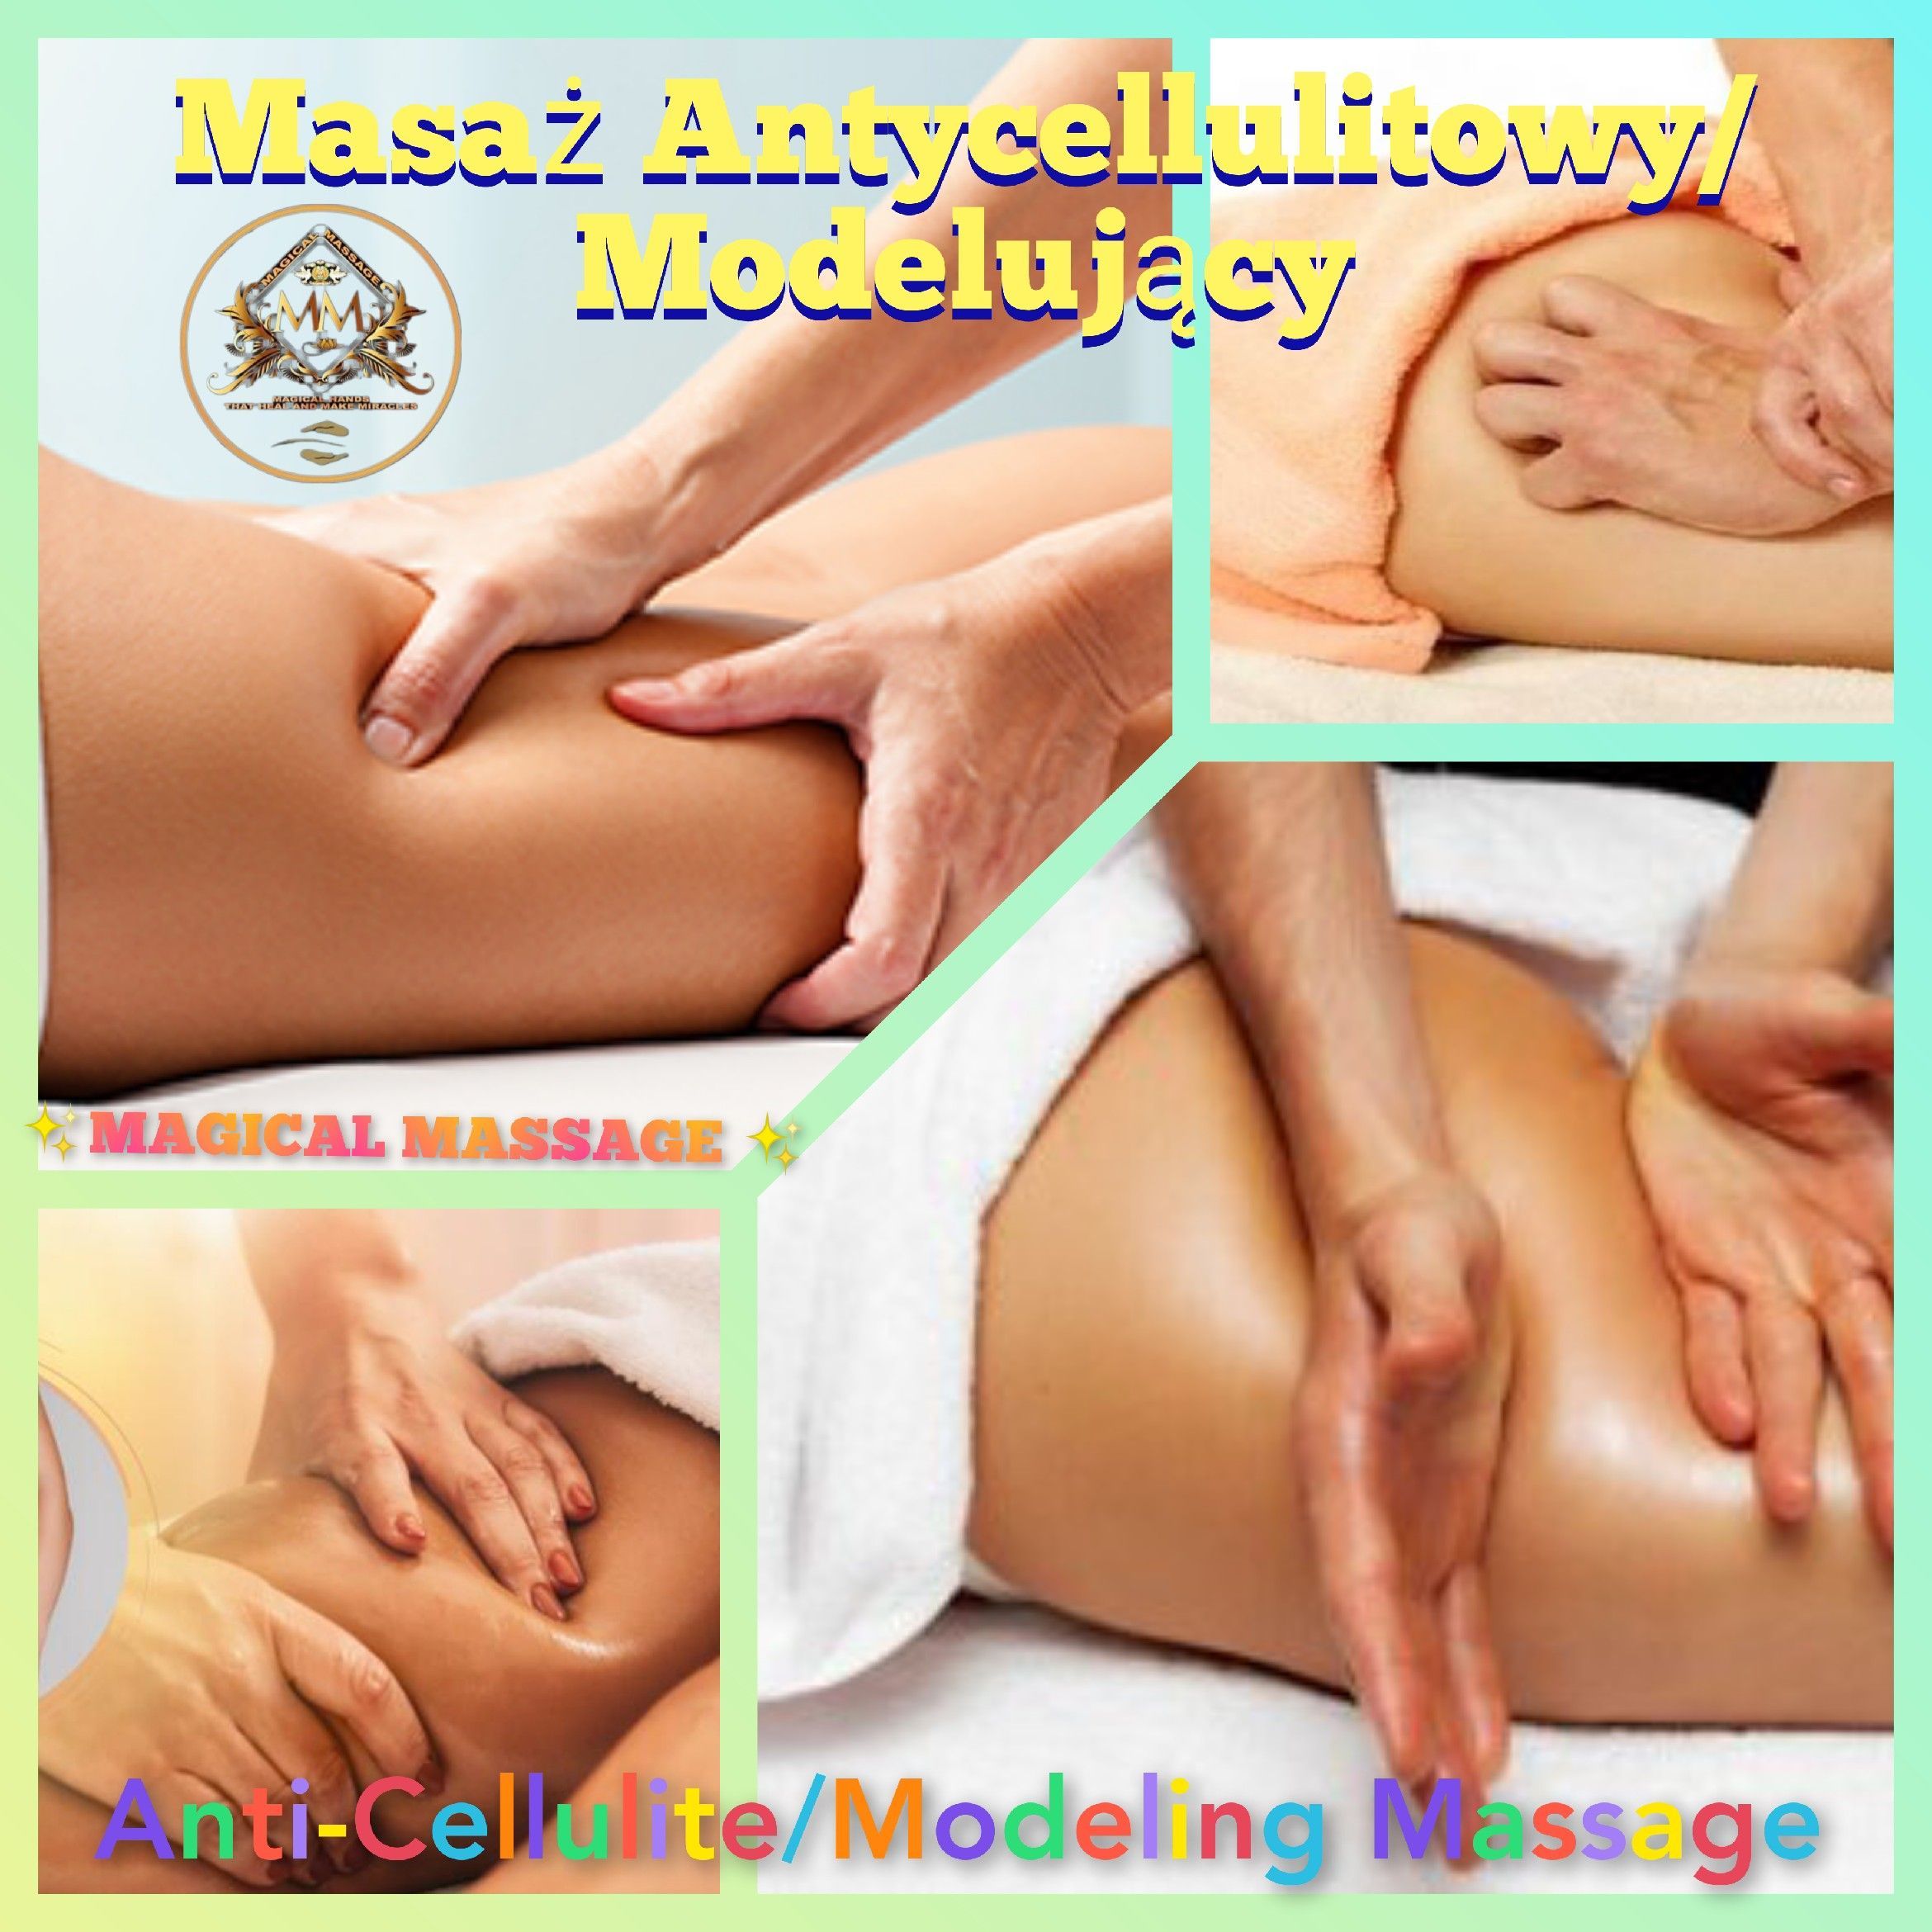 Portfolio usługi Anti-Cellulite/Modeling Massage